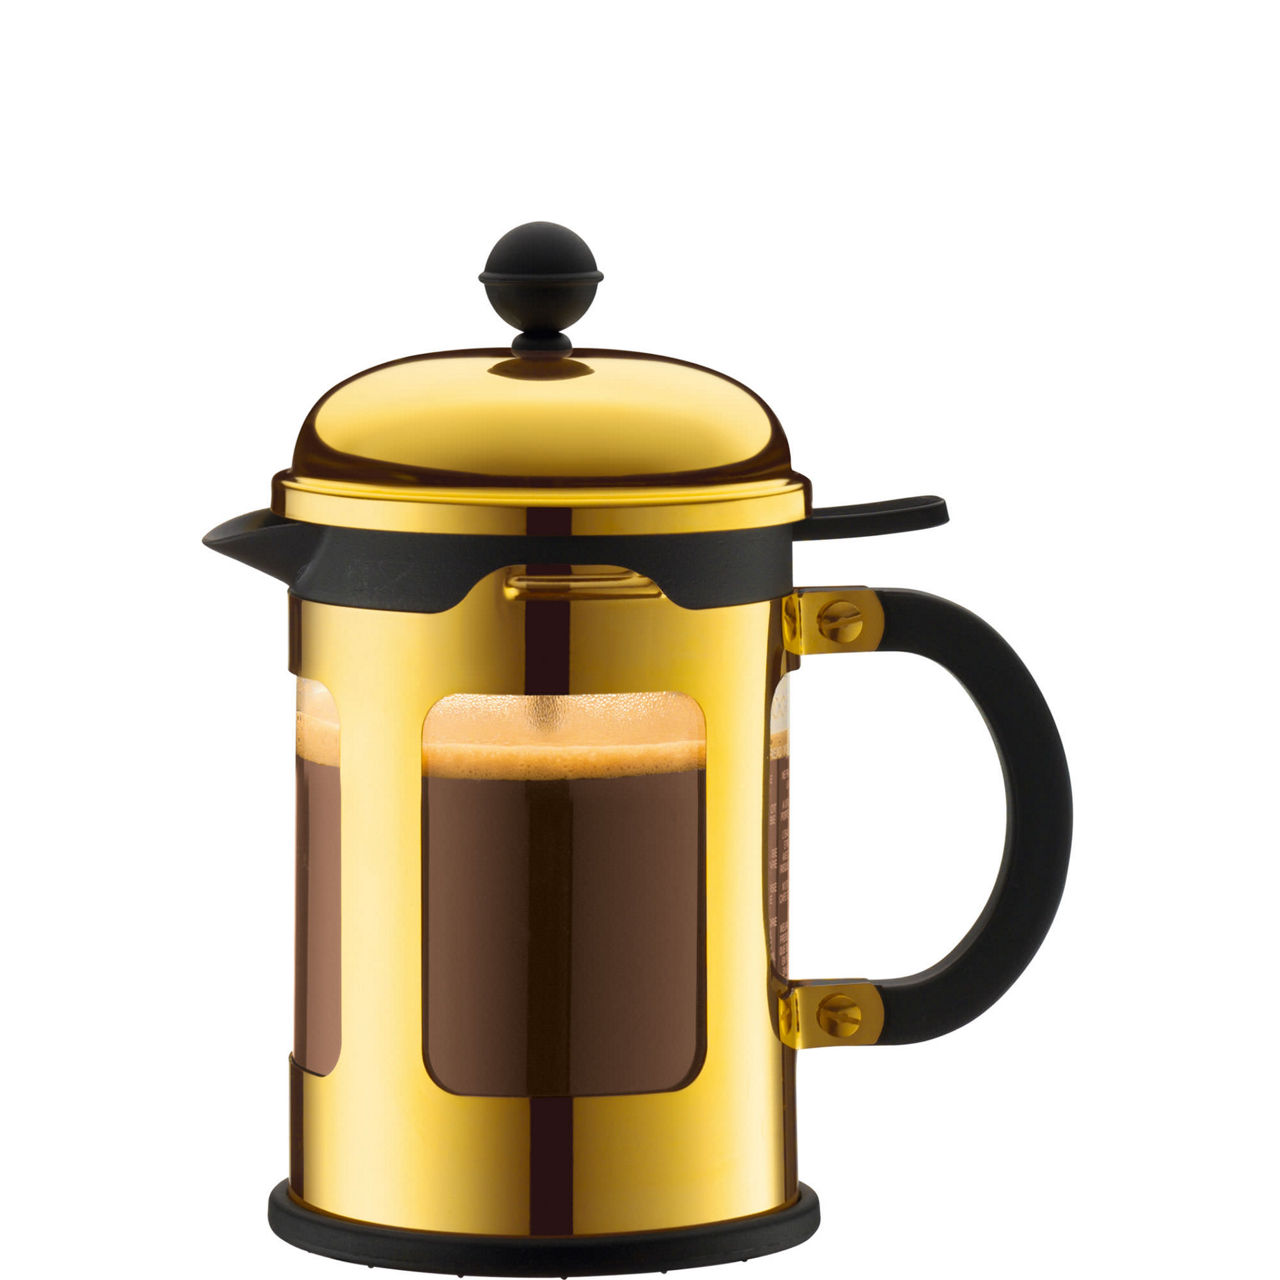 Bodum Caffettiera French Press Coffee Maker, 8 Cup, 1.0 L, 34 oz Black